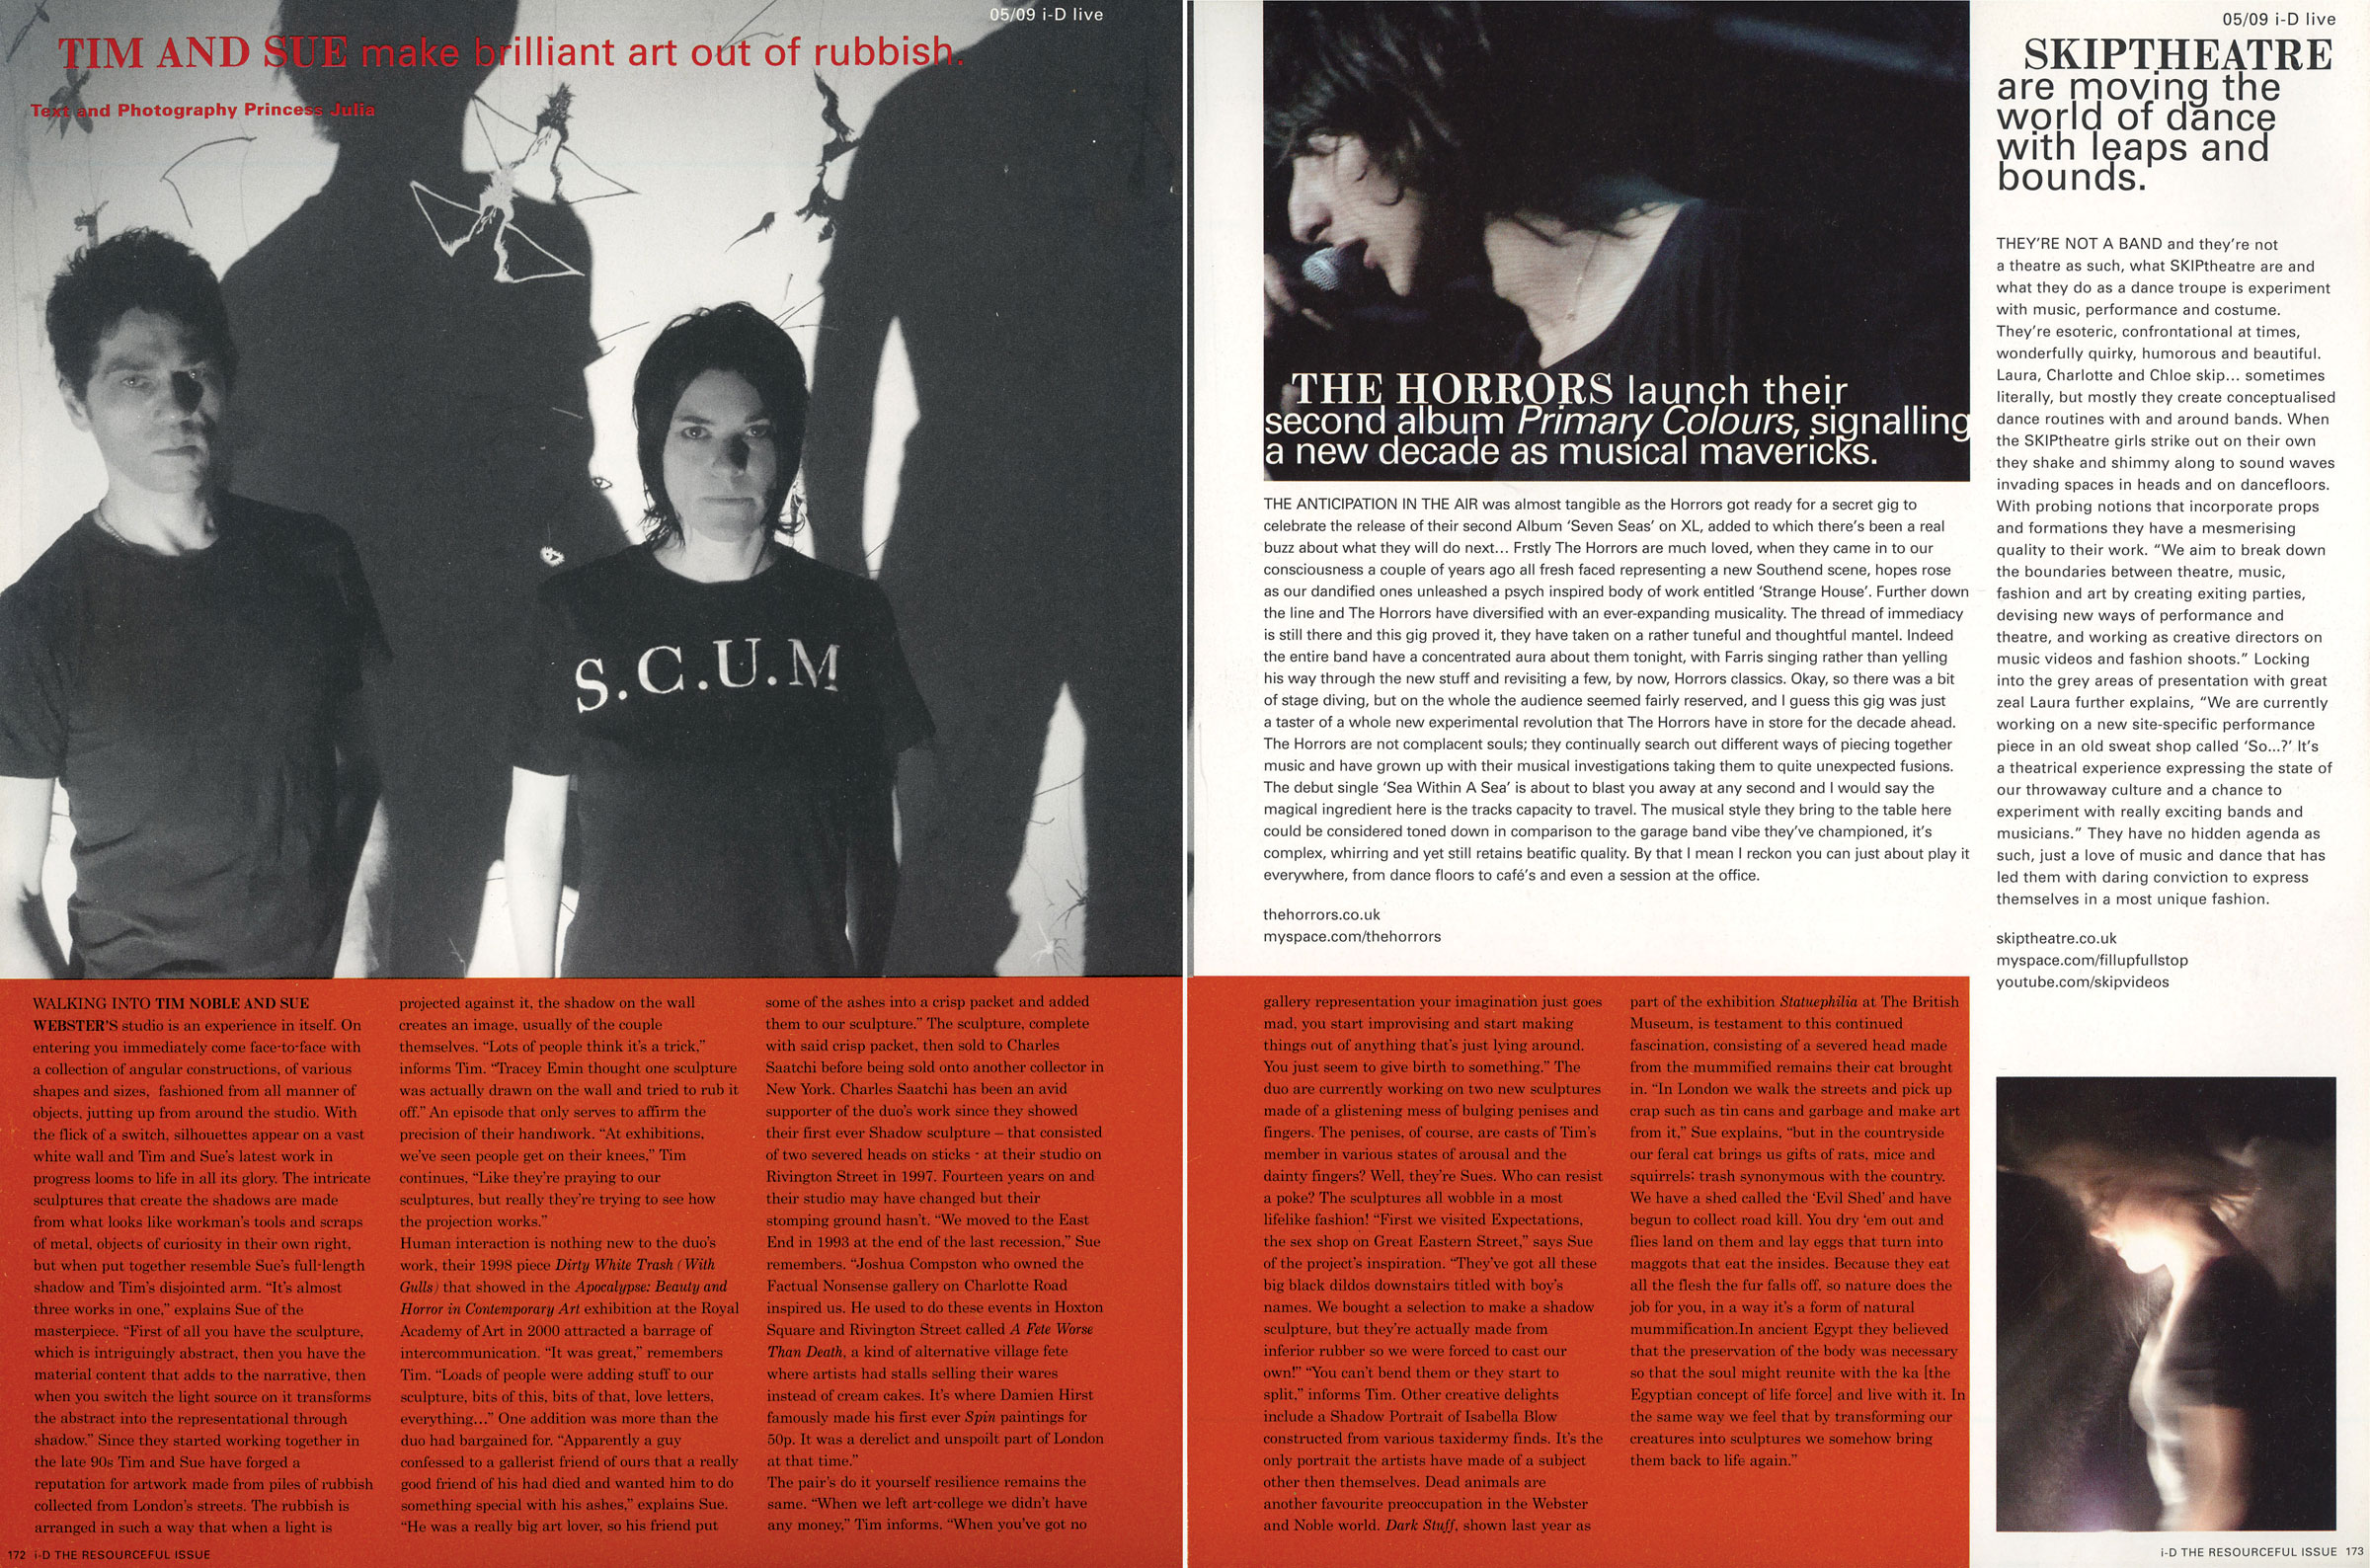  i-D magazine, May 2009, pgs 172-173